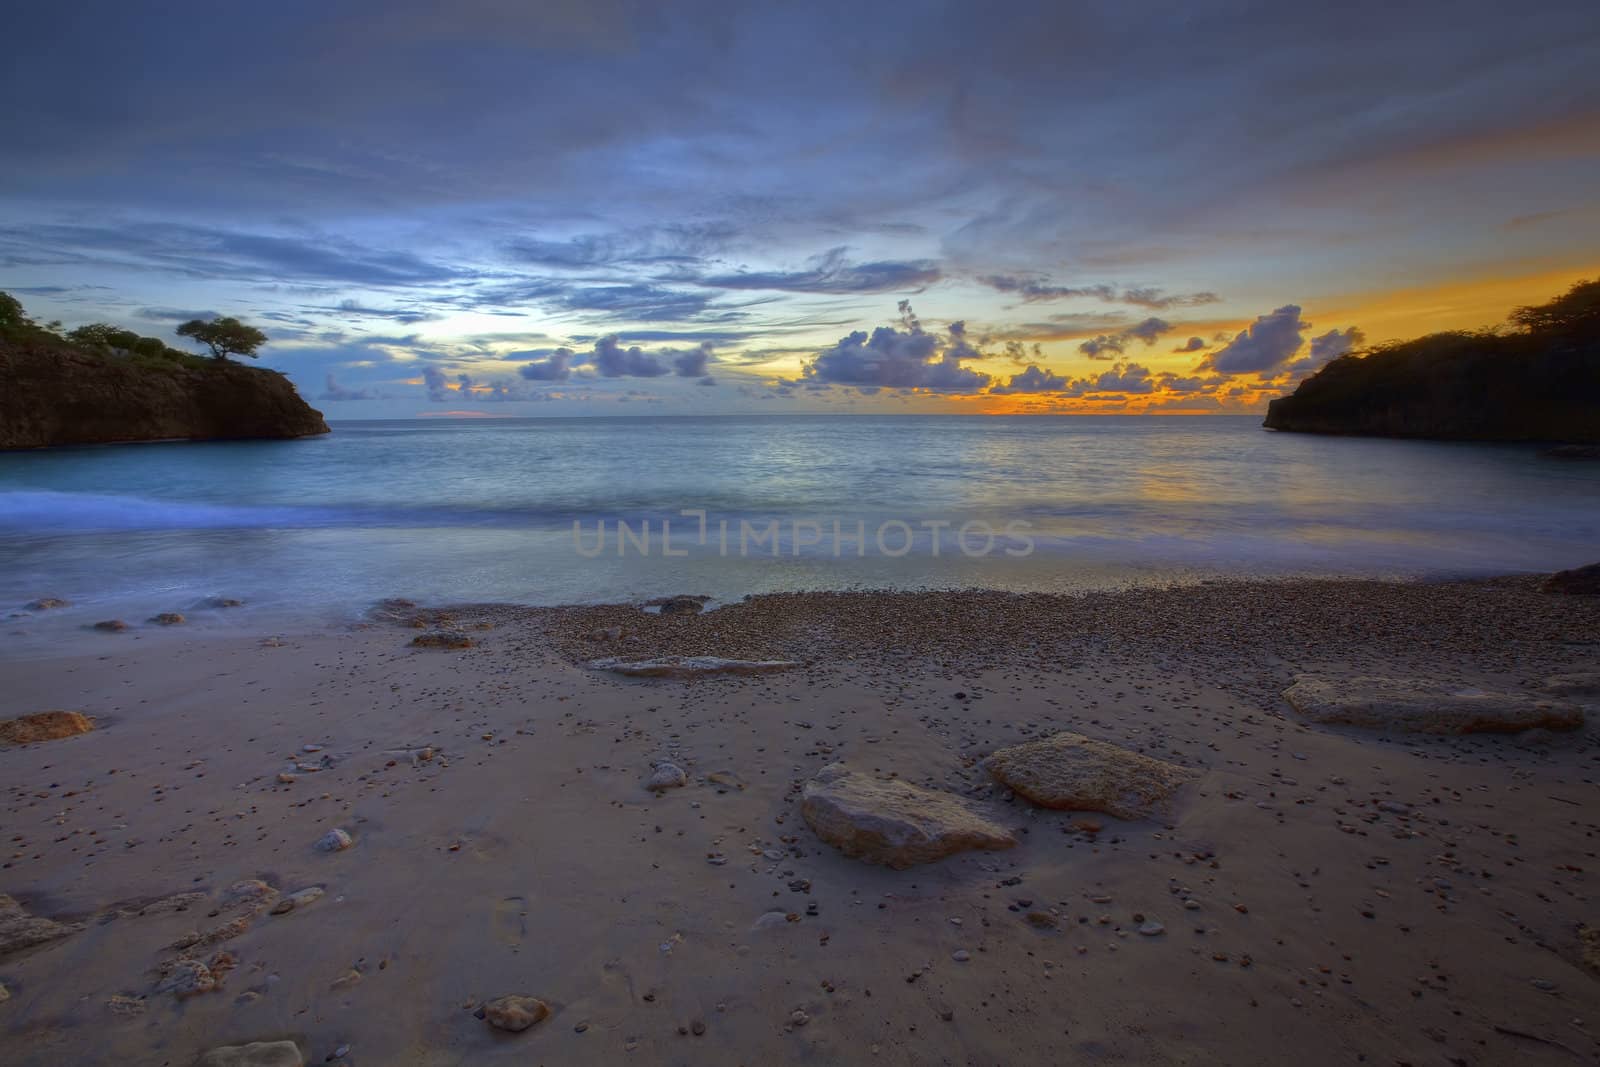 Sunset Curacao by kjorgen